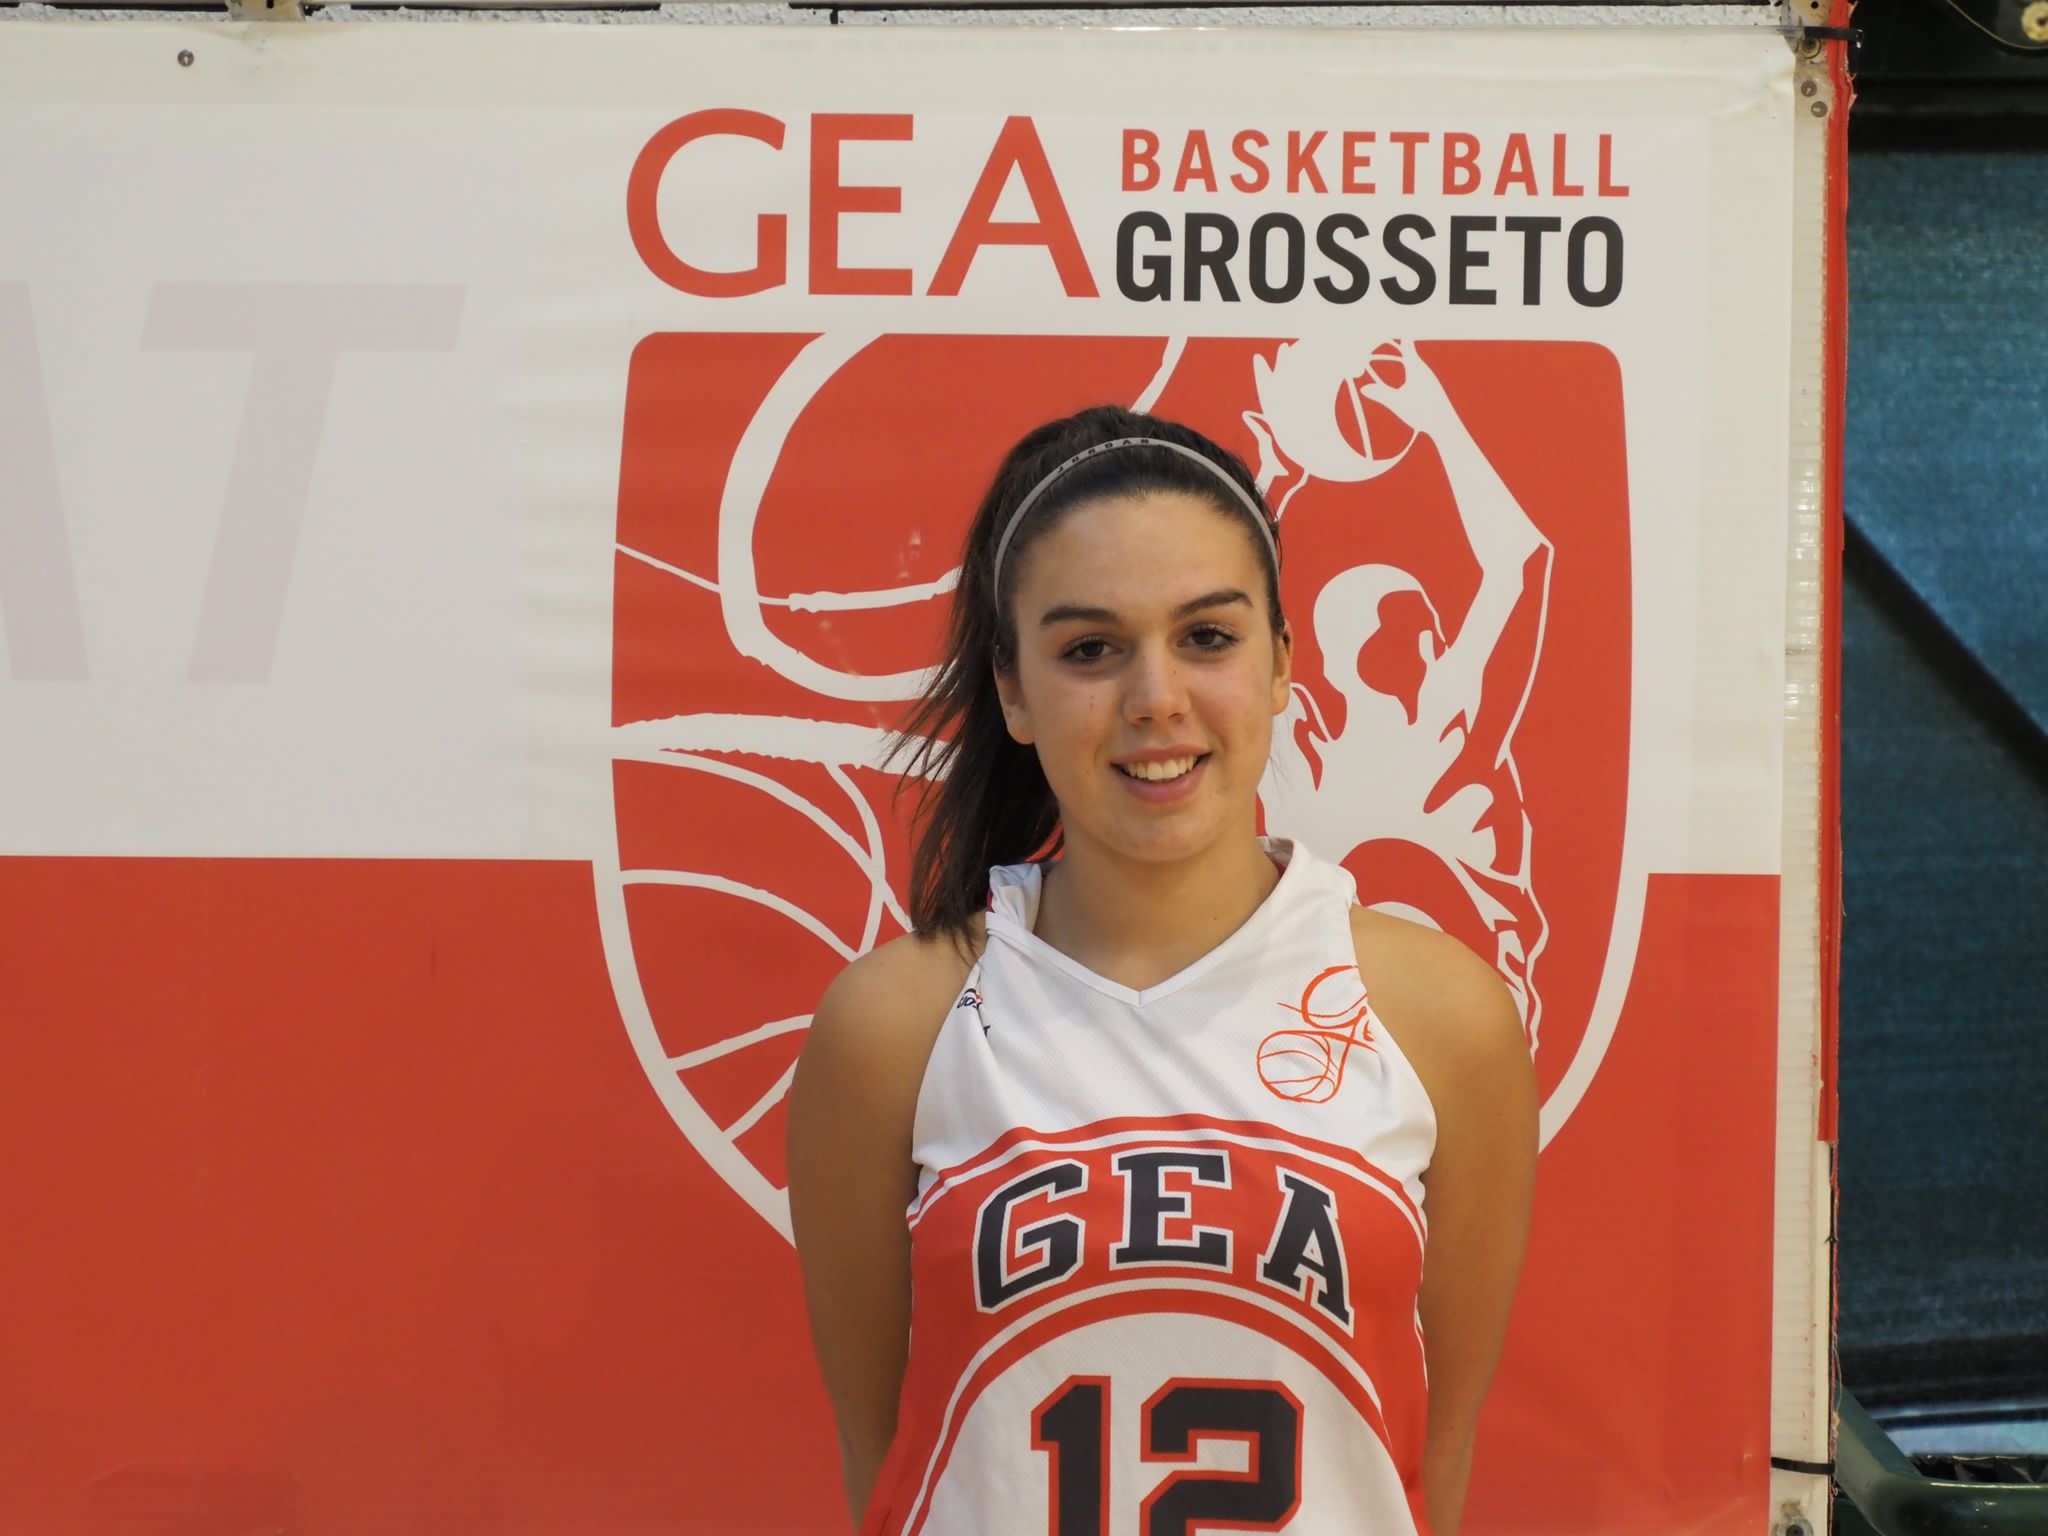 basket-gea-grosseto-serie-b-Clara-Nunziatini